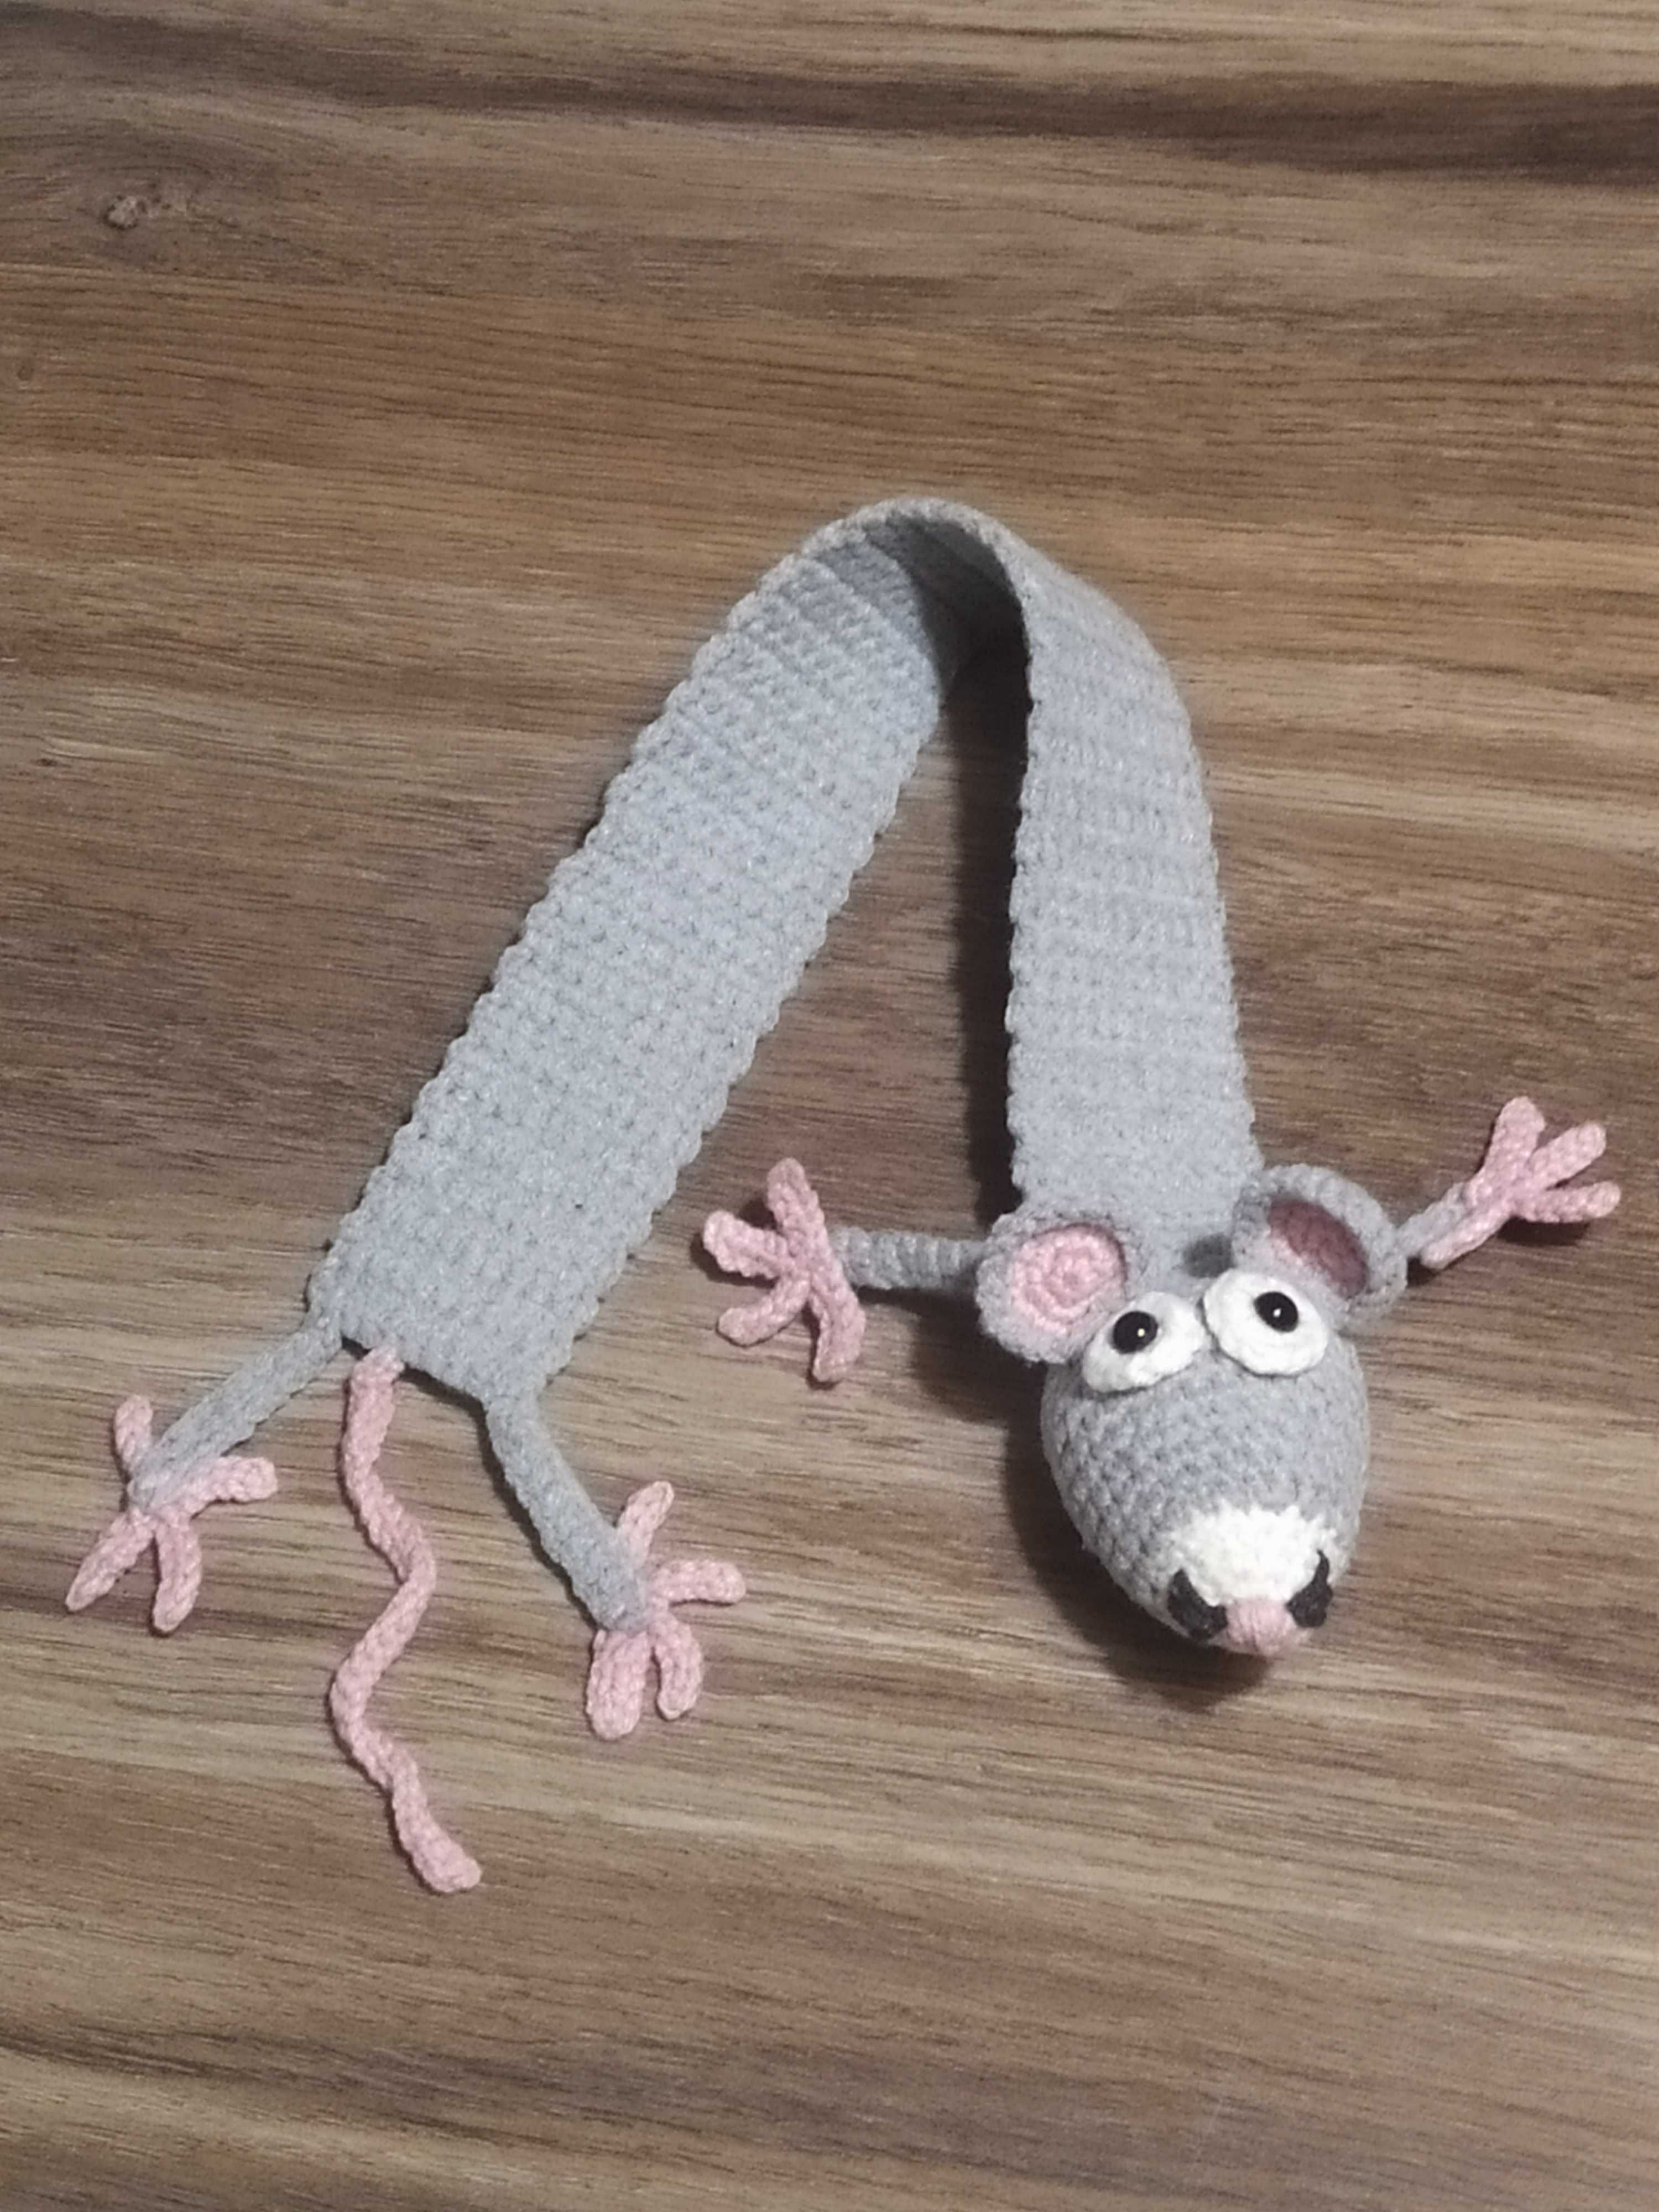 Mysz myszka zakładka na szydełku hand made oryginalny prezent.